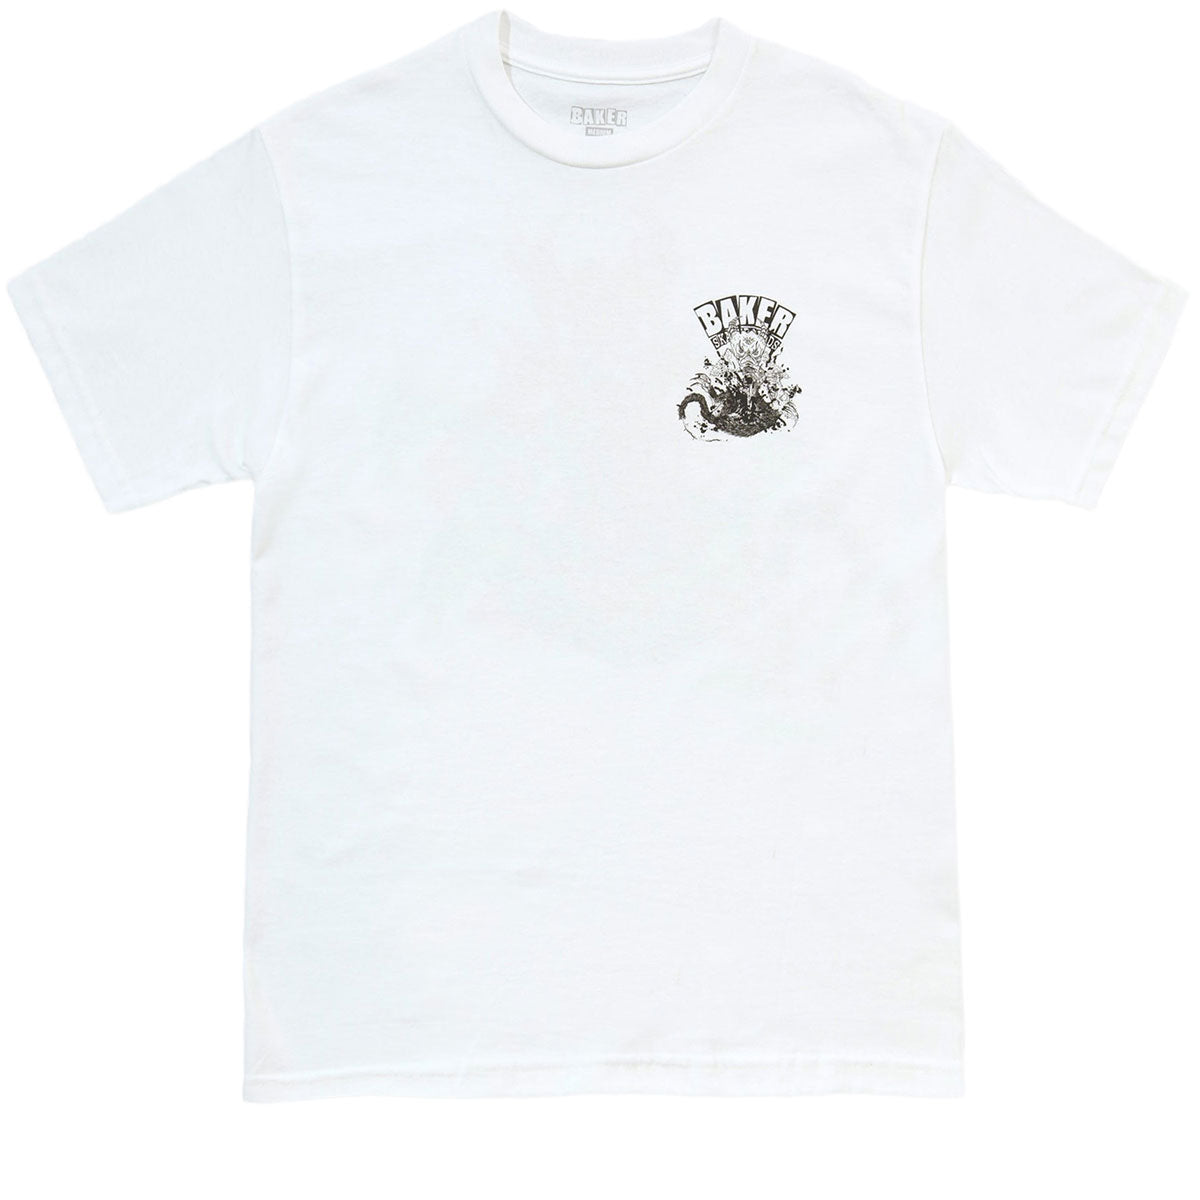 Baker Excalibur T-Shirt - White image 2